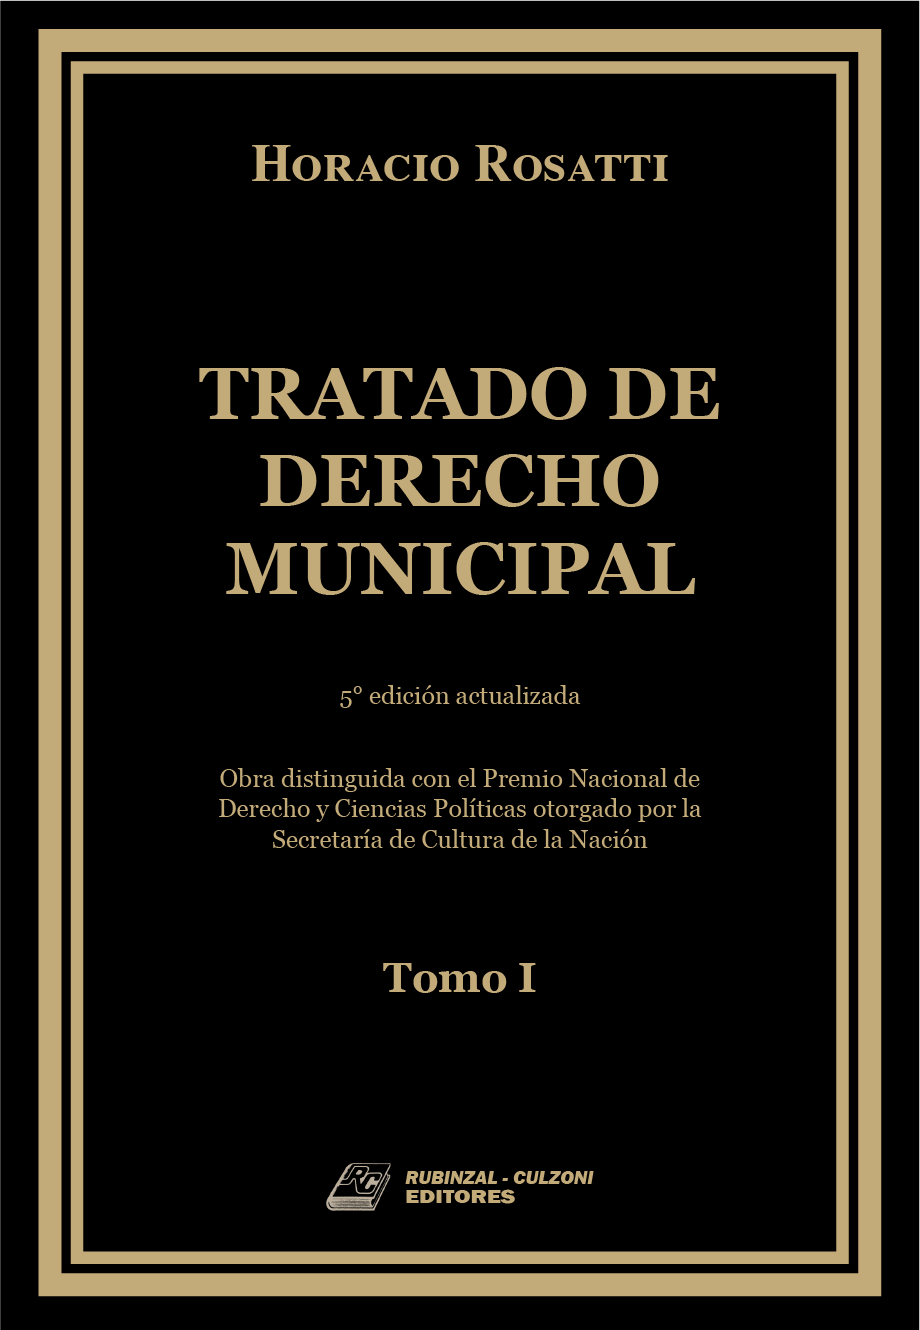 Tratado de Derecho Municipal. - Tomo I. 5ª edición actualizada